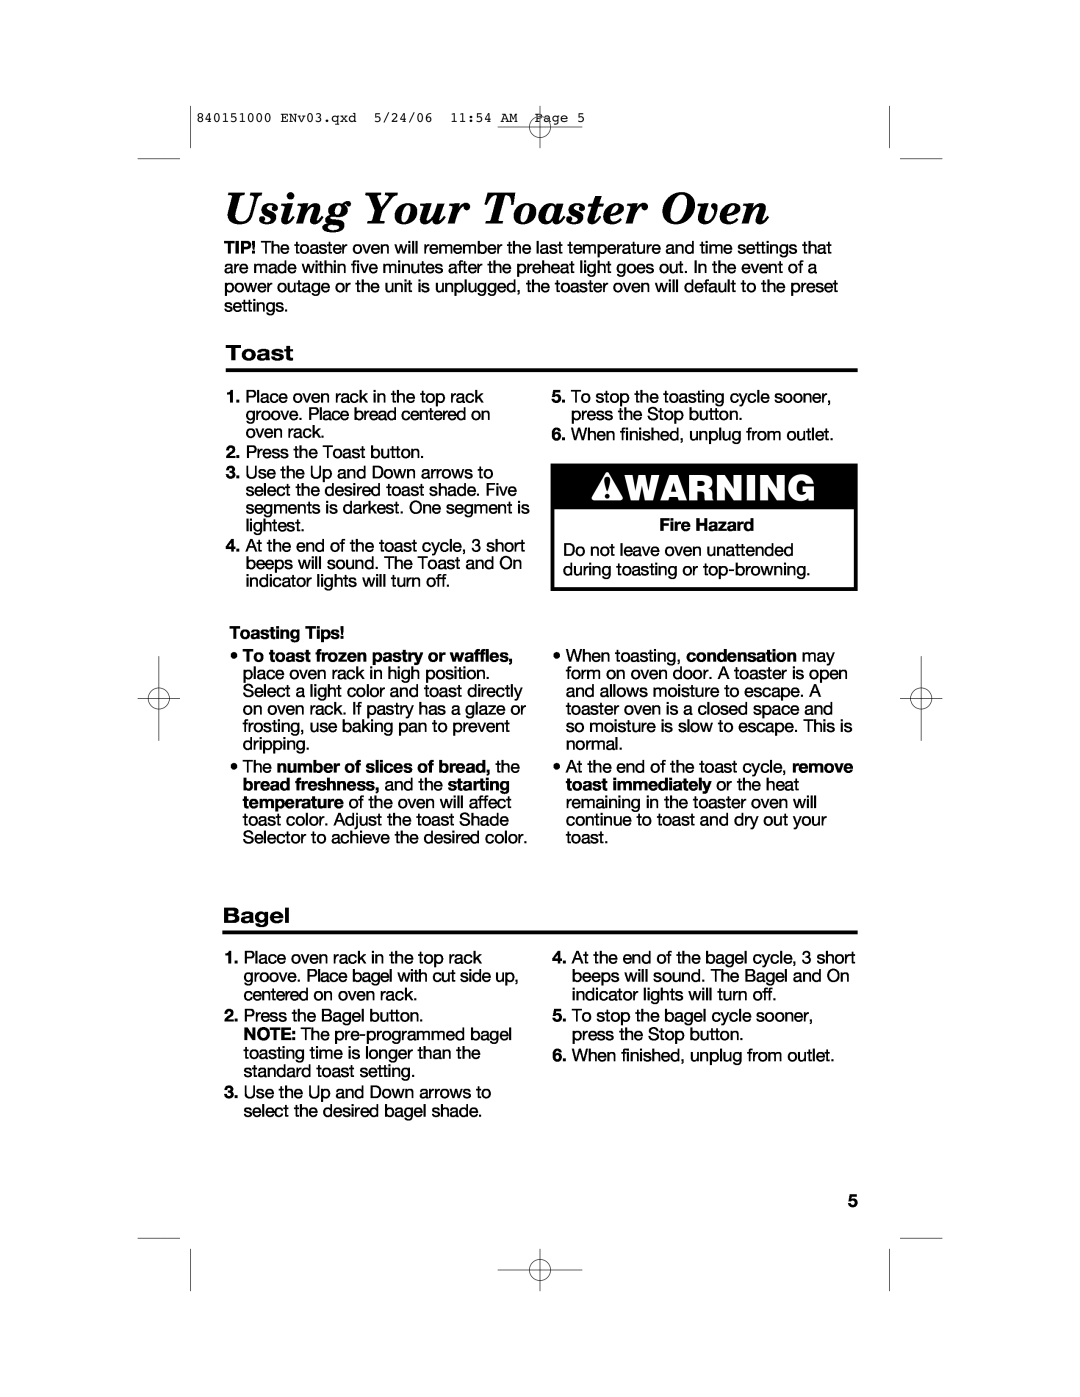 Hamilton Beach 840151000 manual Using Your Toaster Oven, Bagel, wWARNING, Toasting Tips, Fire Hazard 